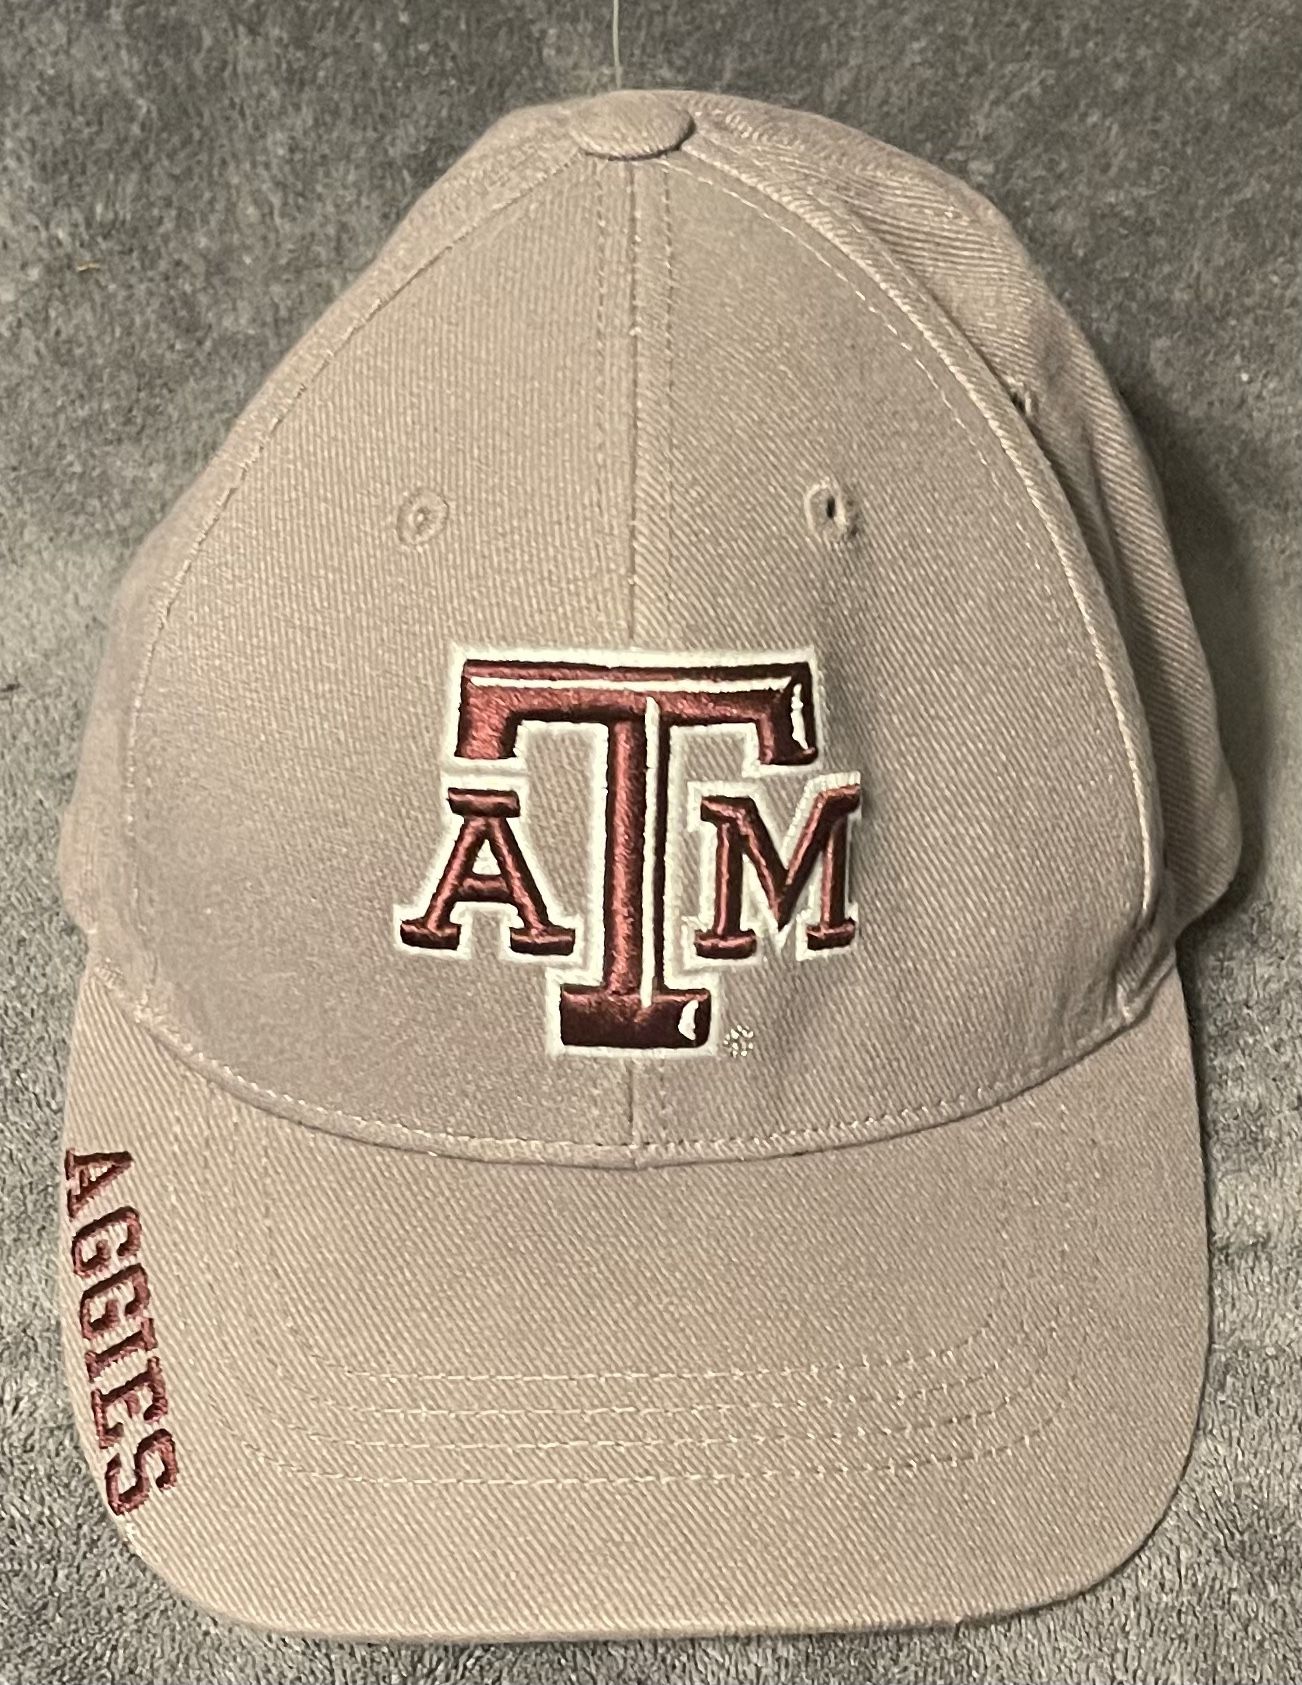 Texas A&M University Baseball Cap One Size Fits All Adjustable Hook & Loop Band.